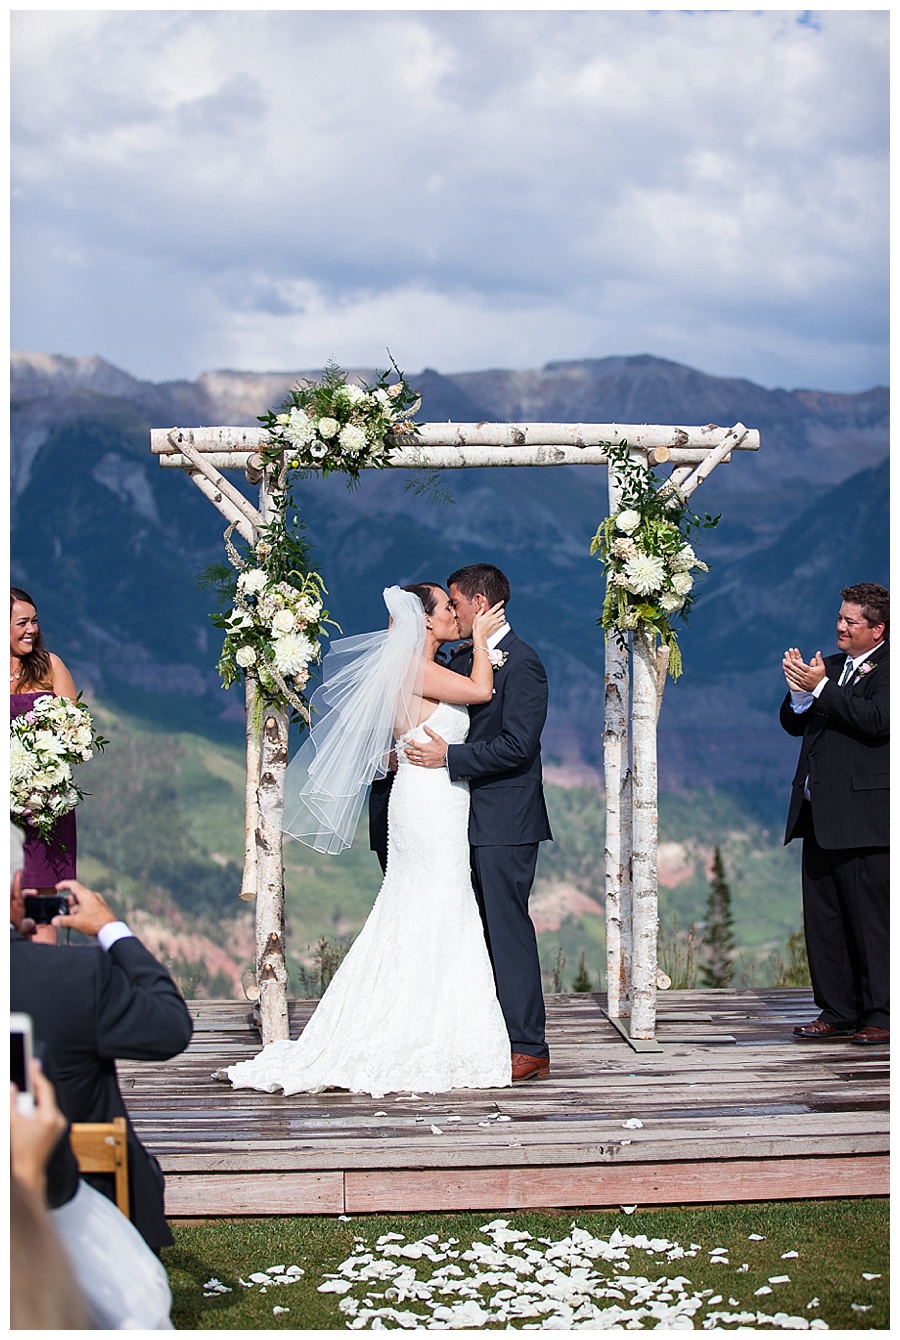 16 Ceremony Kiss at San Sophia Overlook in Telluride rainy romantic wedding